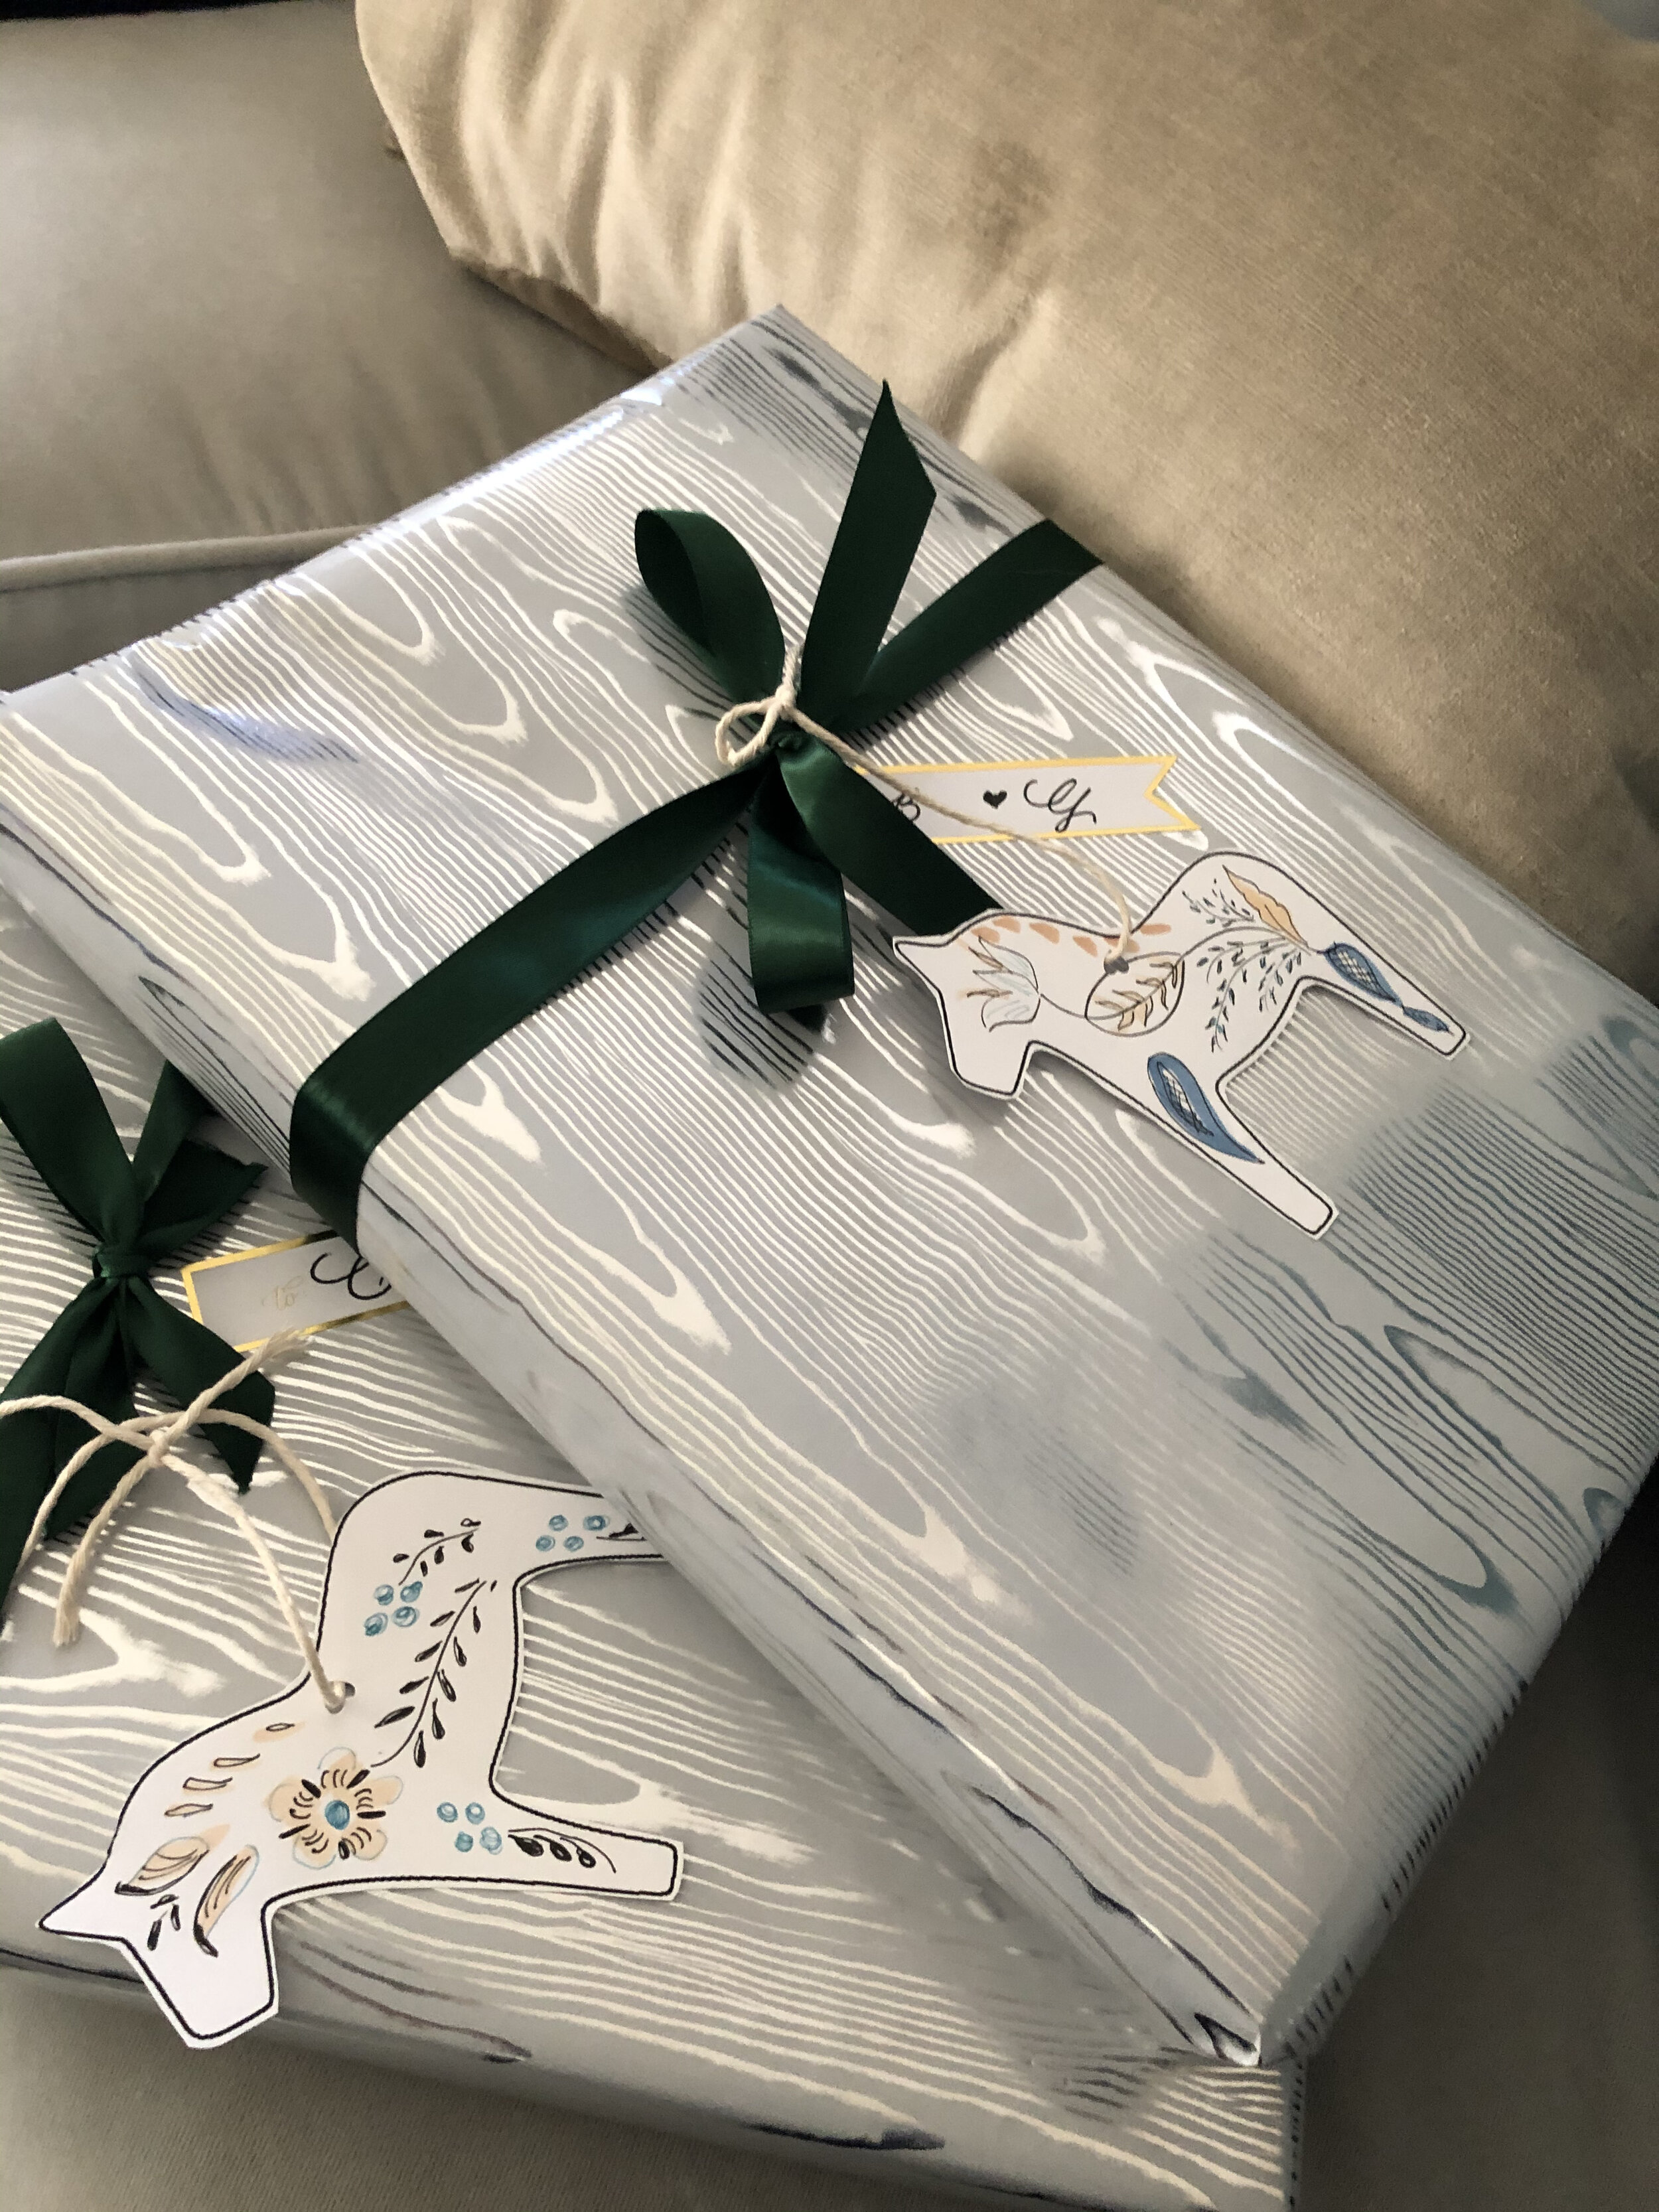 Dala Horse Gift Tags | @beesandbubbles